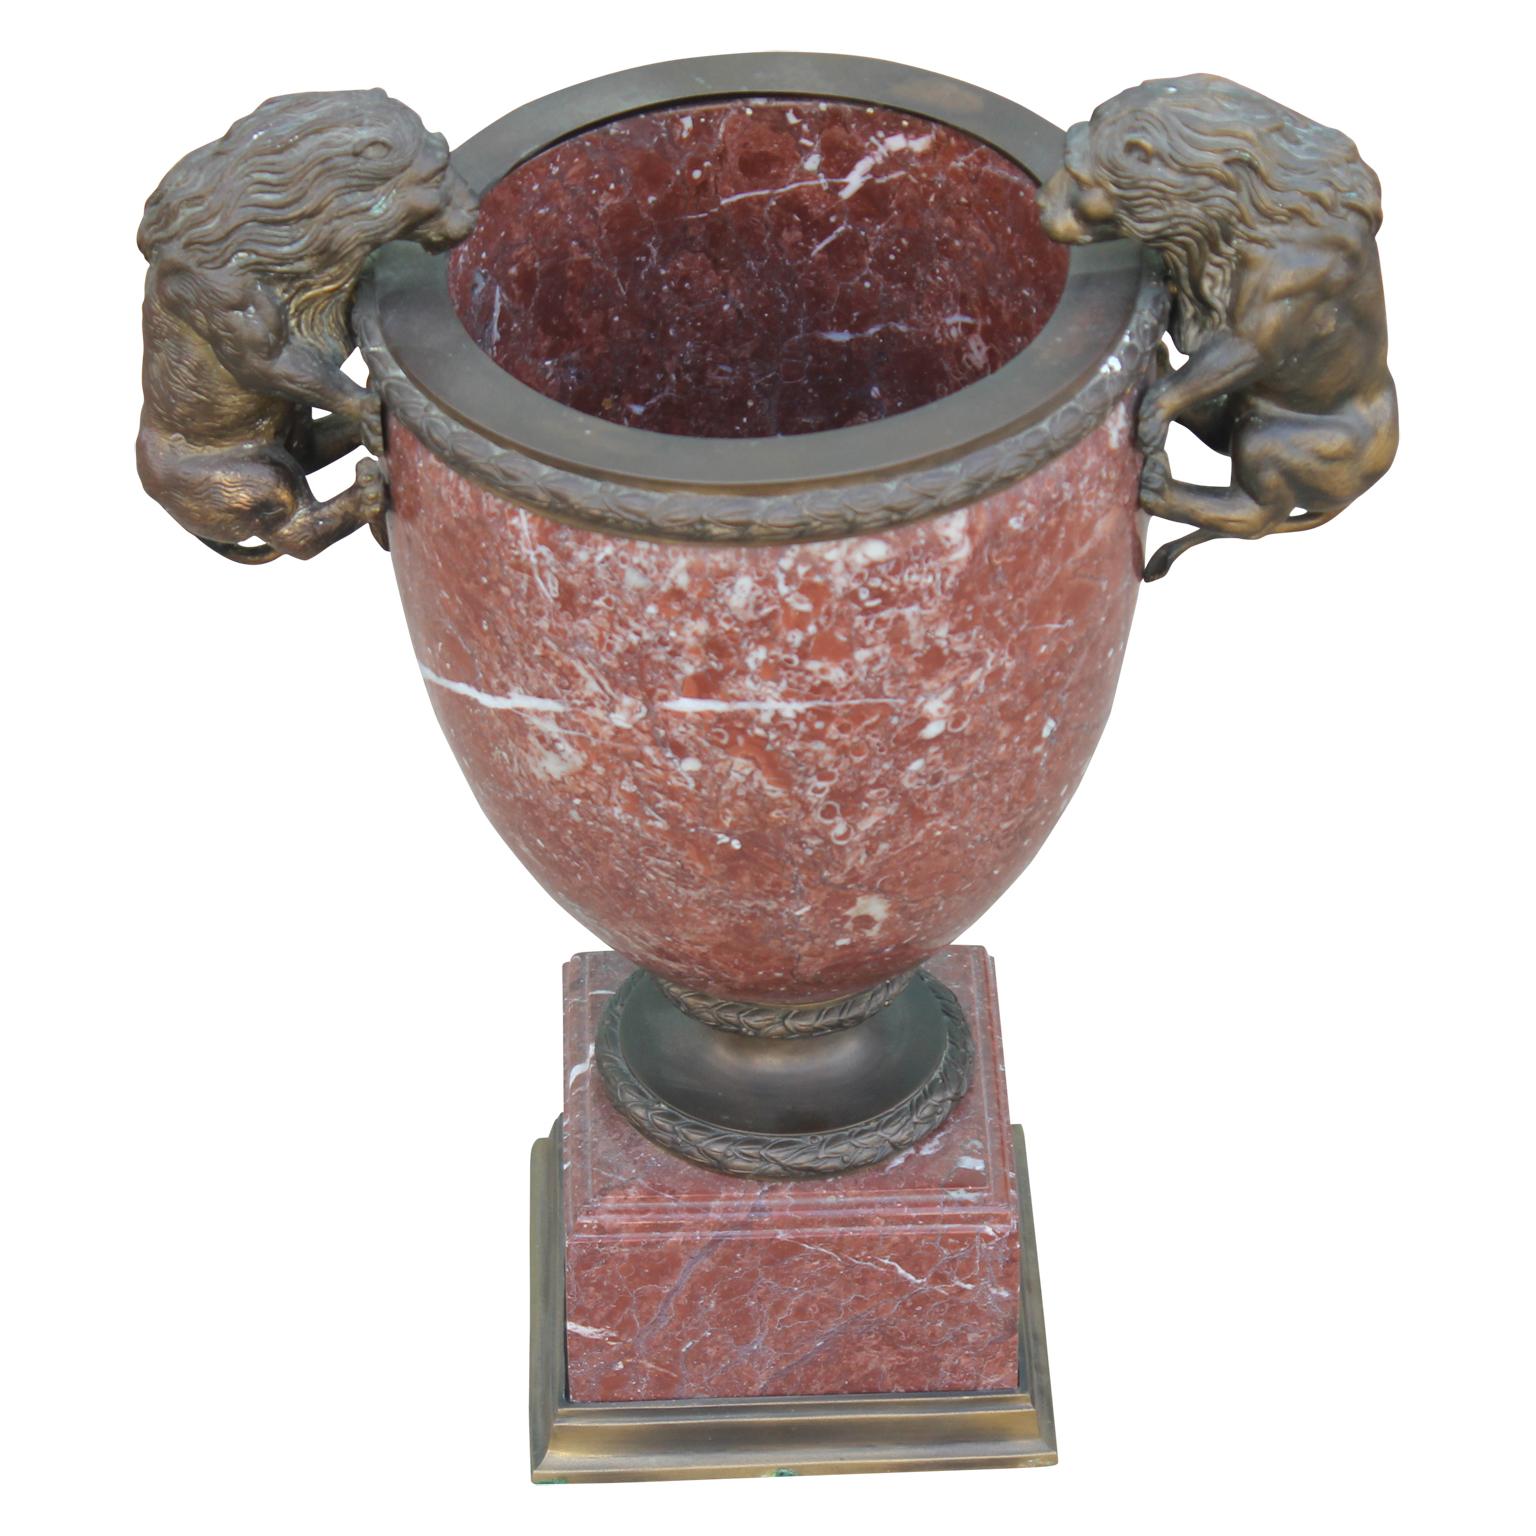 Wonderful Regency bronze lion Verde Antico jardinière in red marble urn. Absolutely lovely.